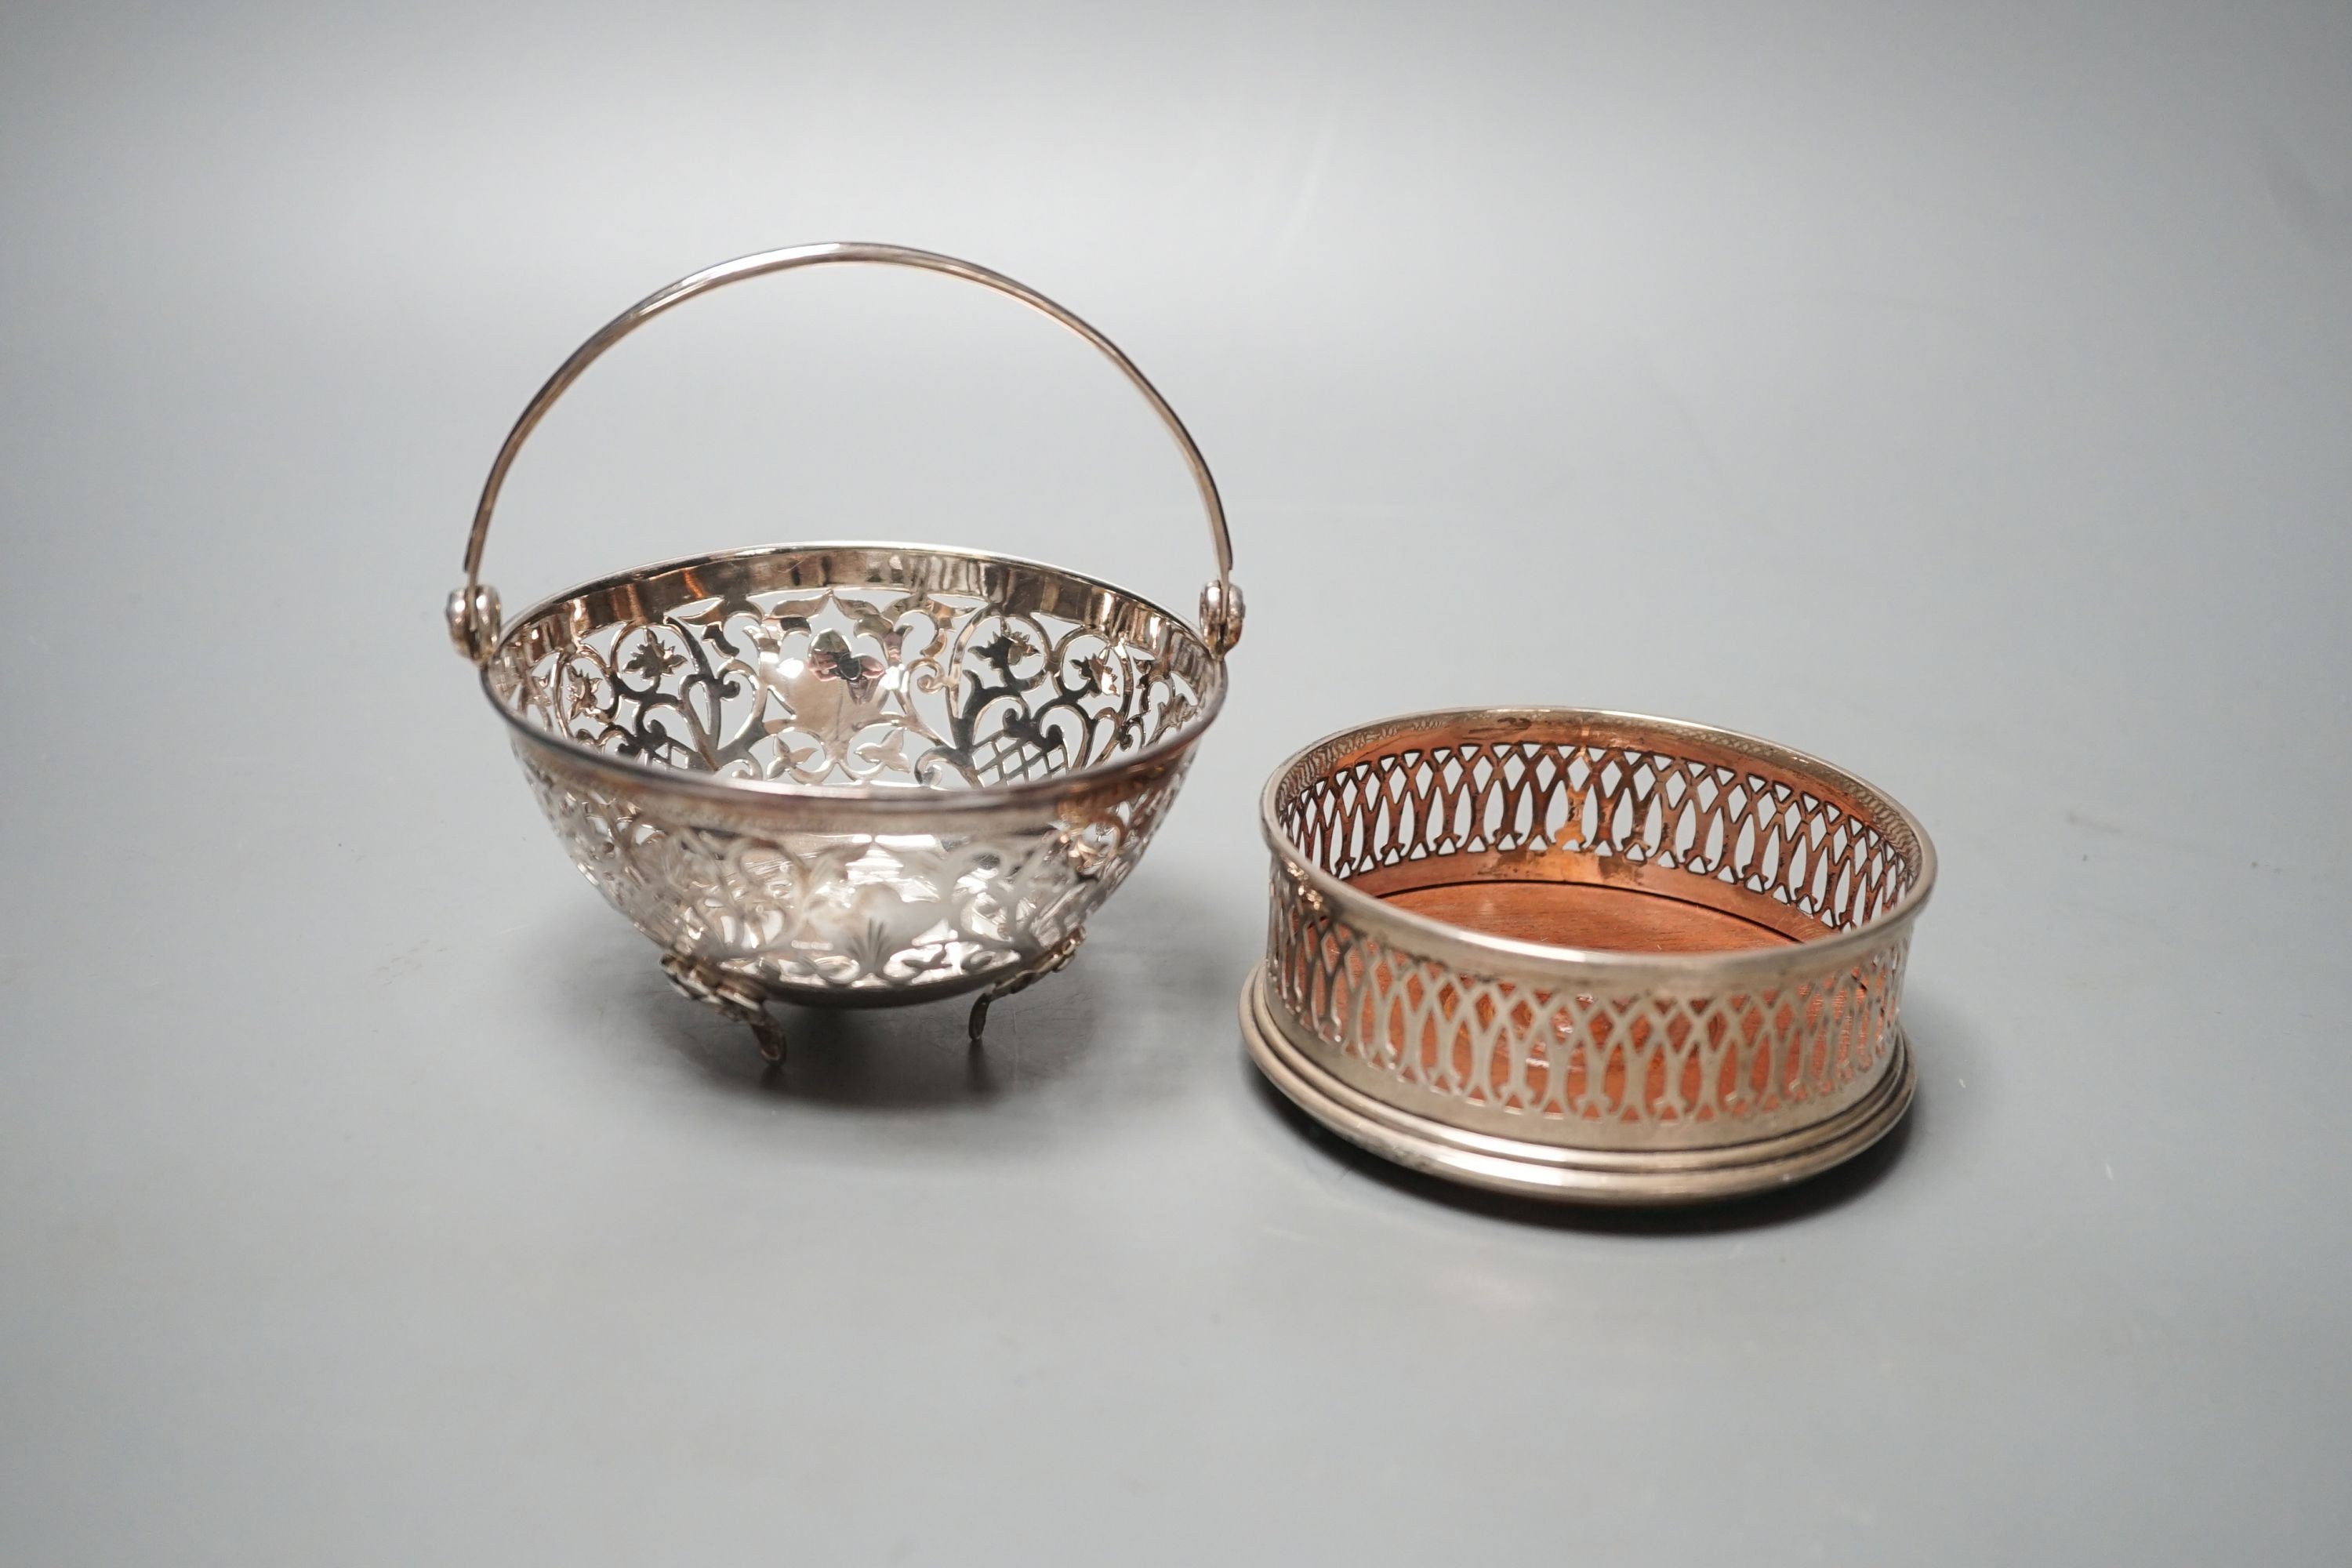 A modern pierced silver sweetmeat basket, 10cm and a similar pierced silver wine coaster.